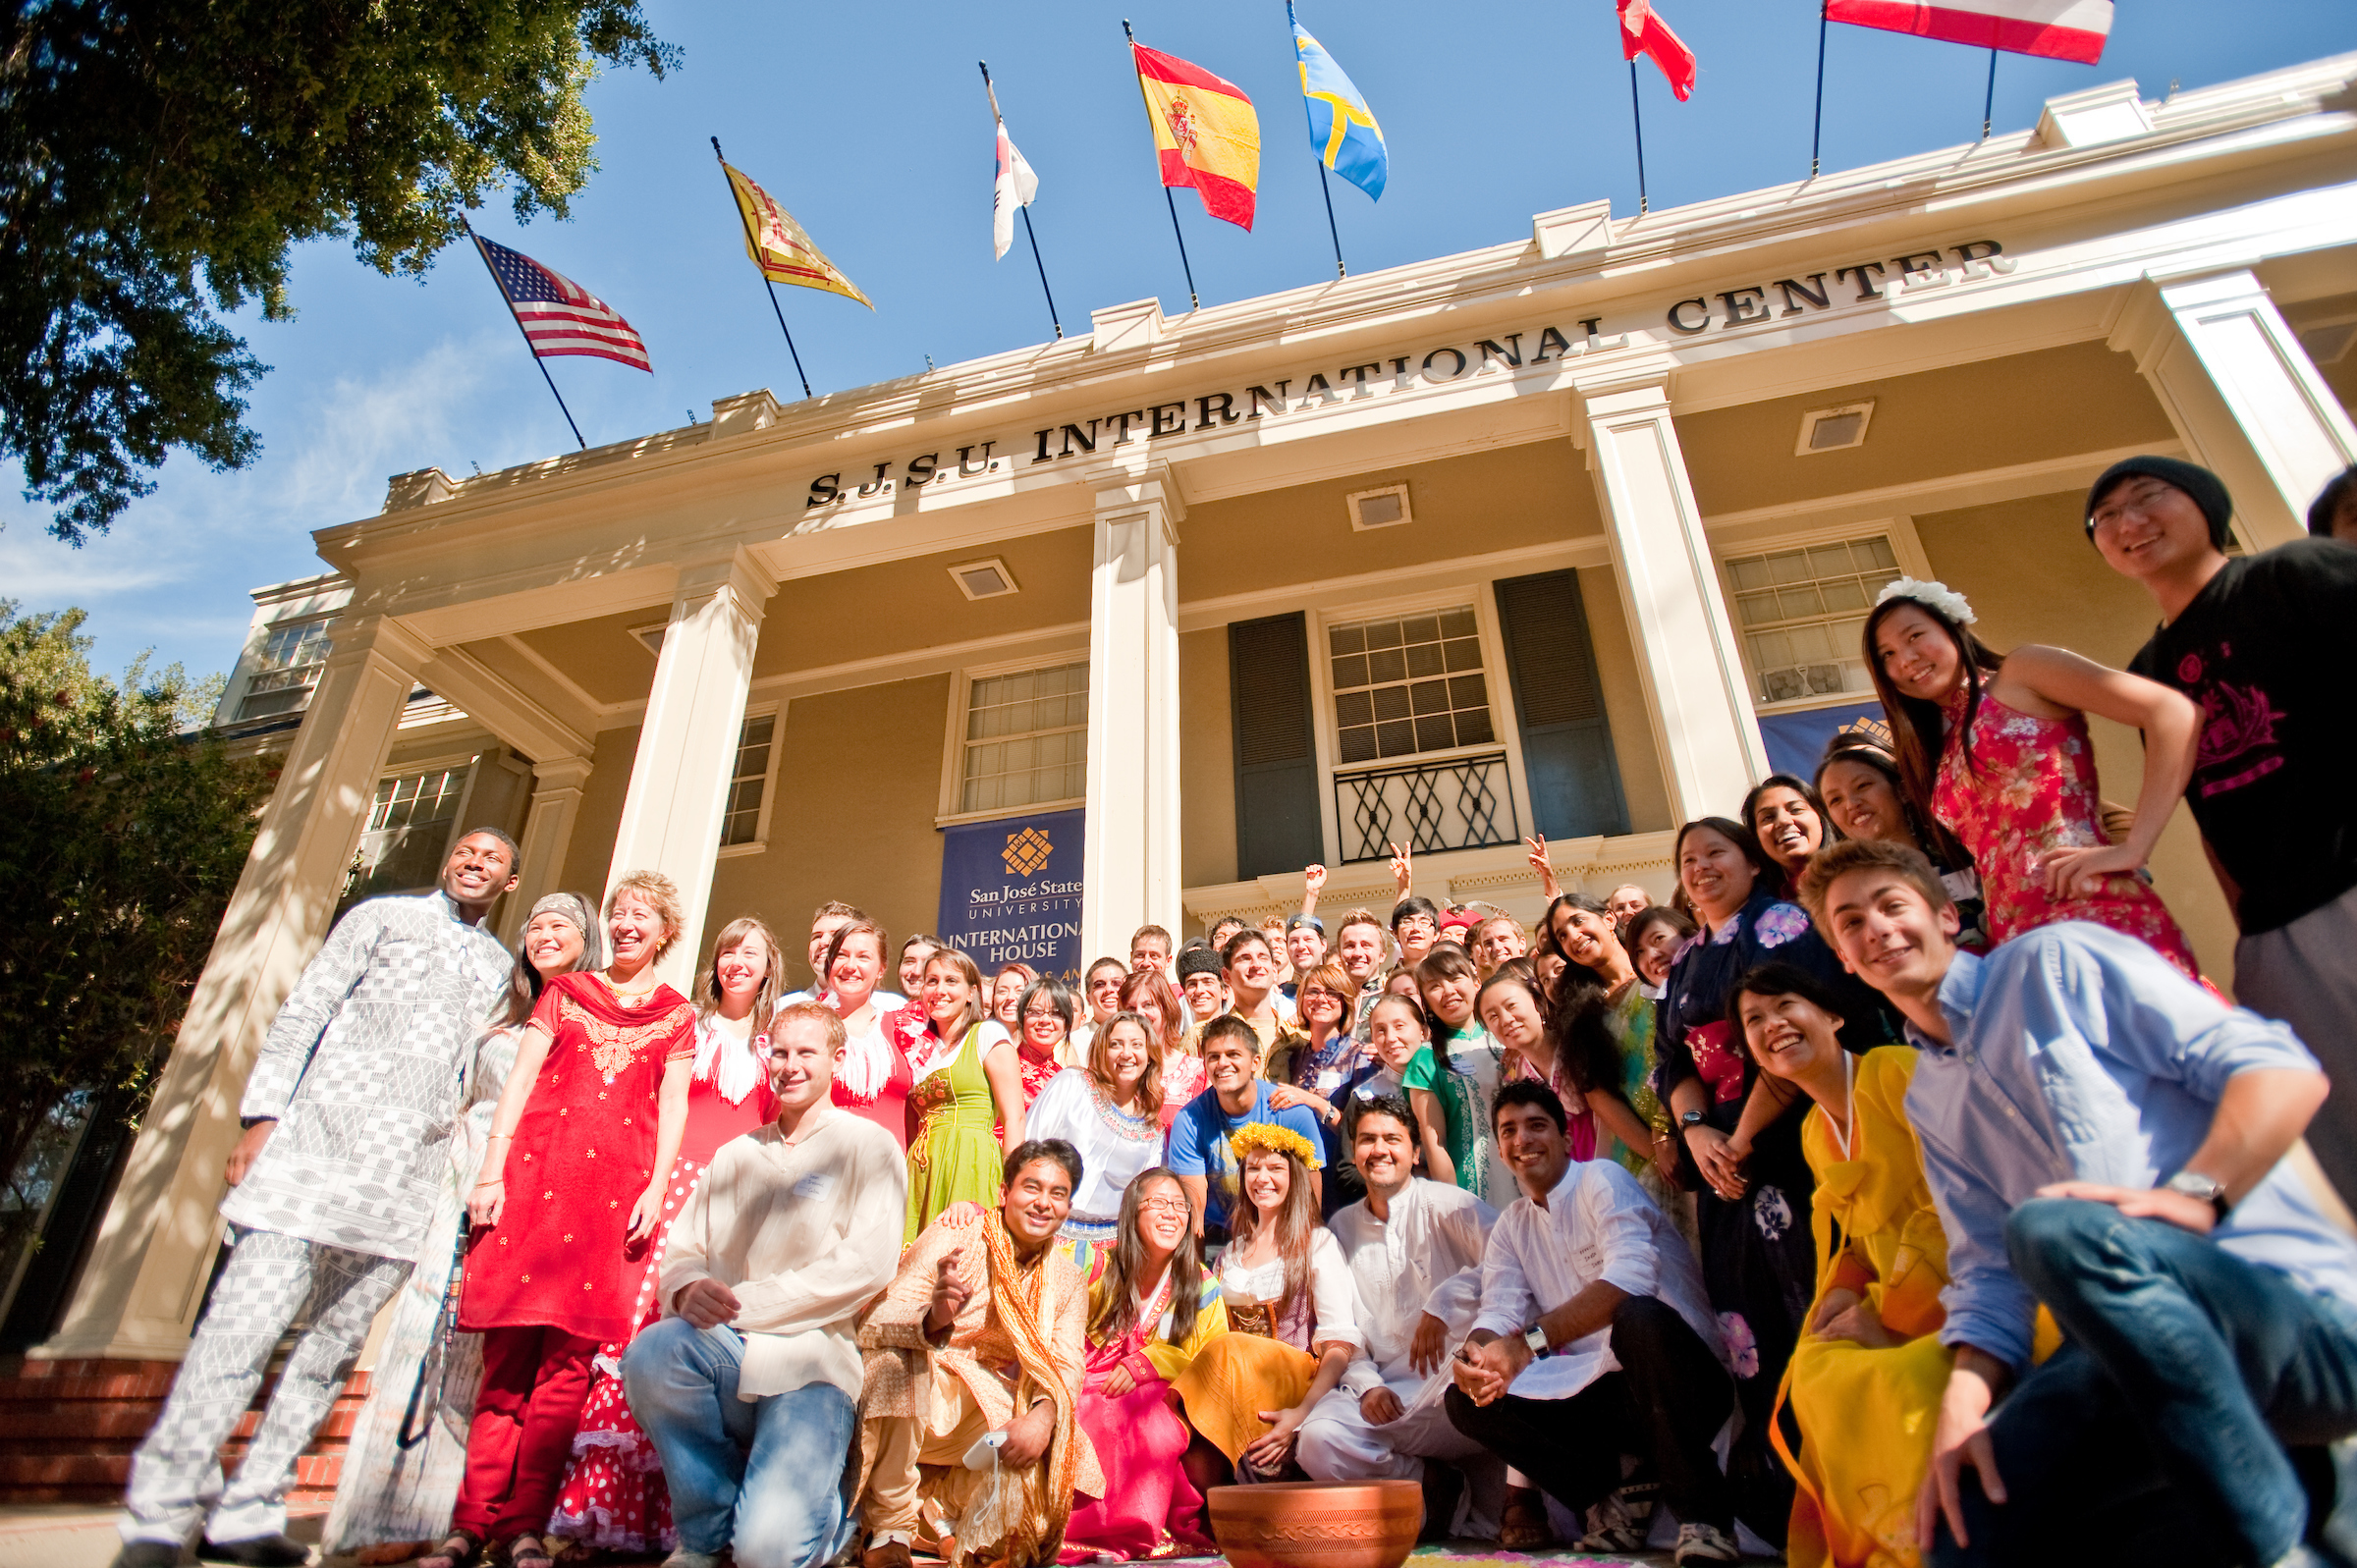 A group of international students pose outside the SJSU International Center.